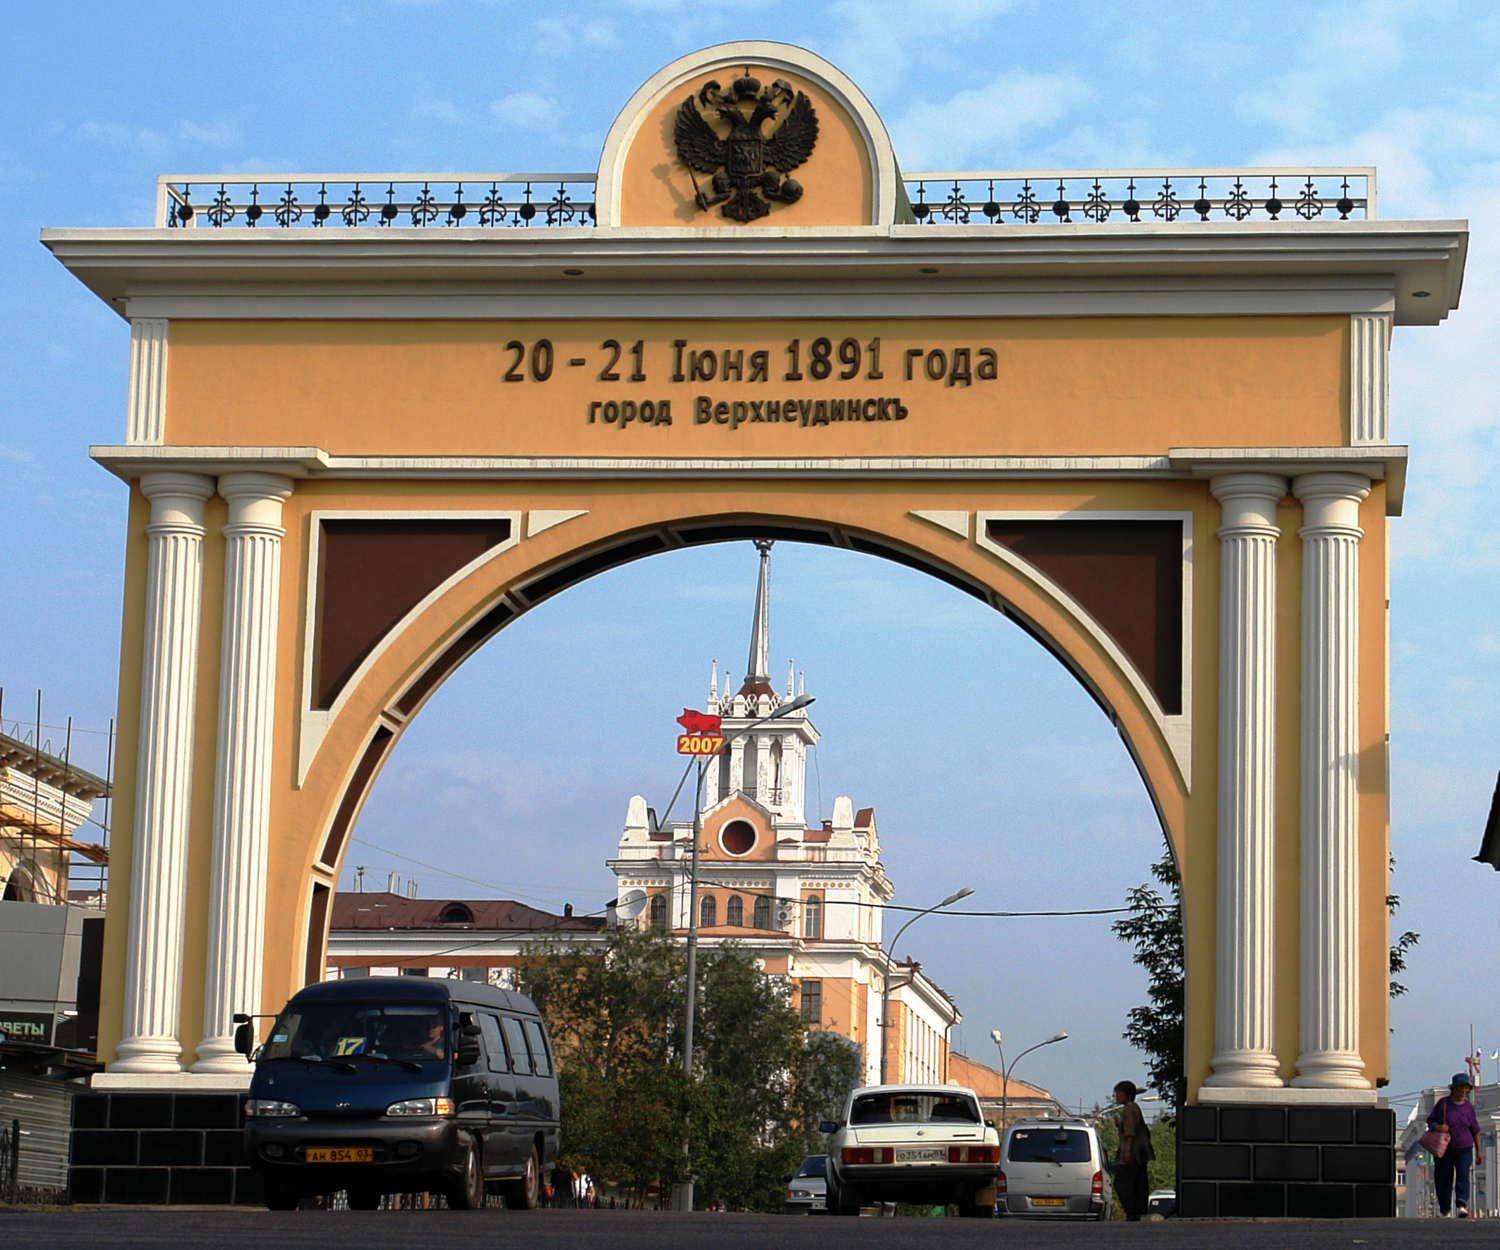 Триумфальная арка "Царские ворота"